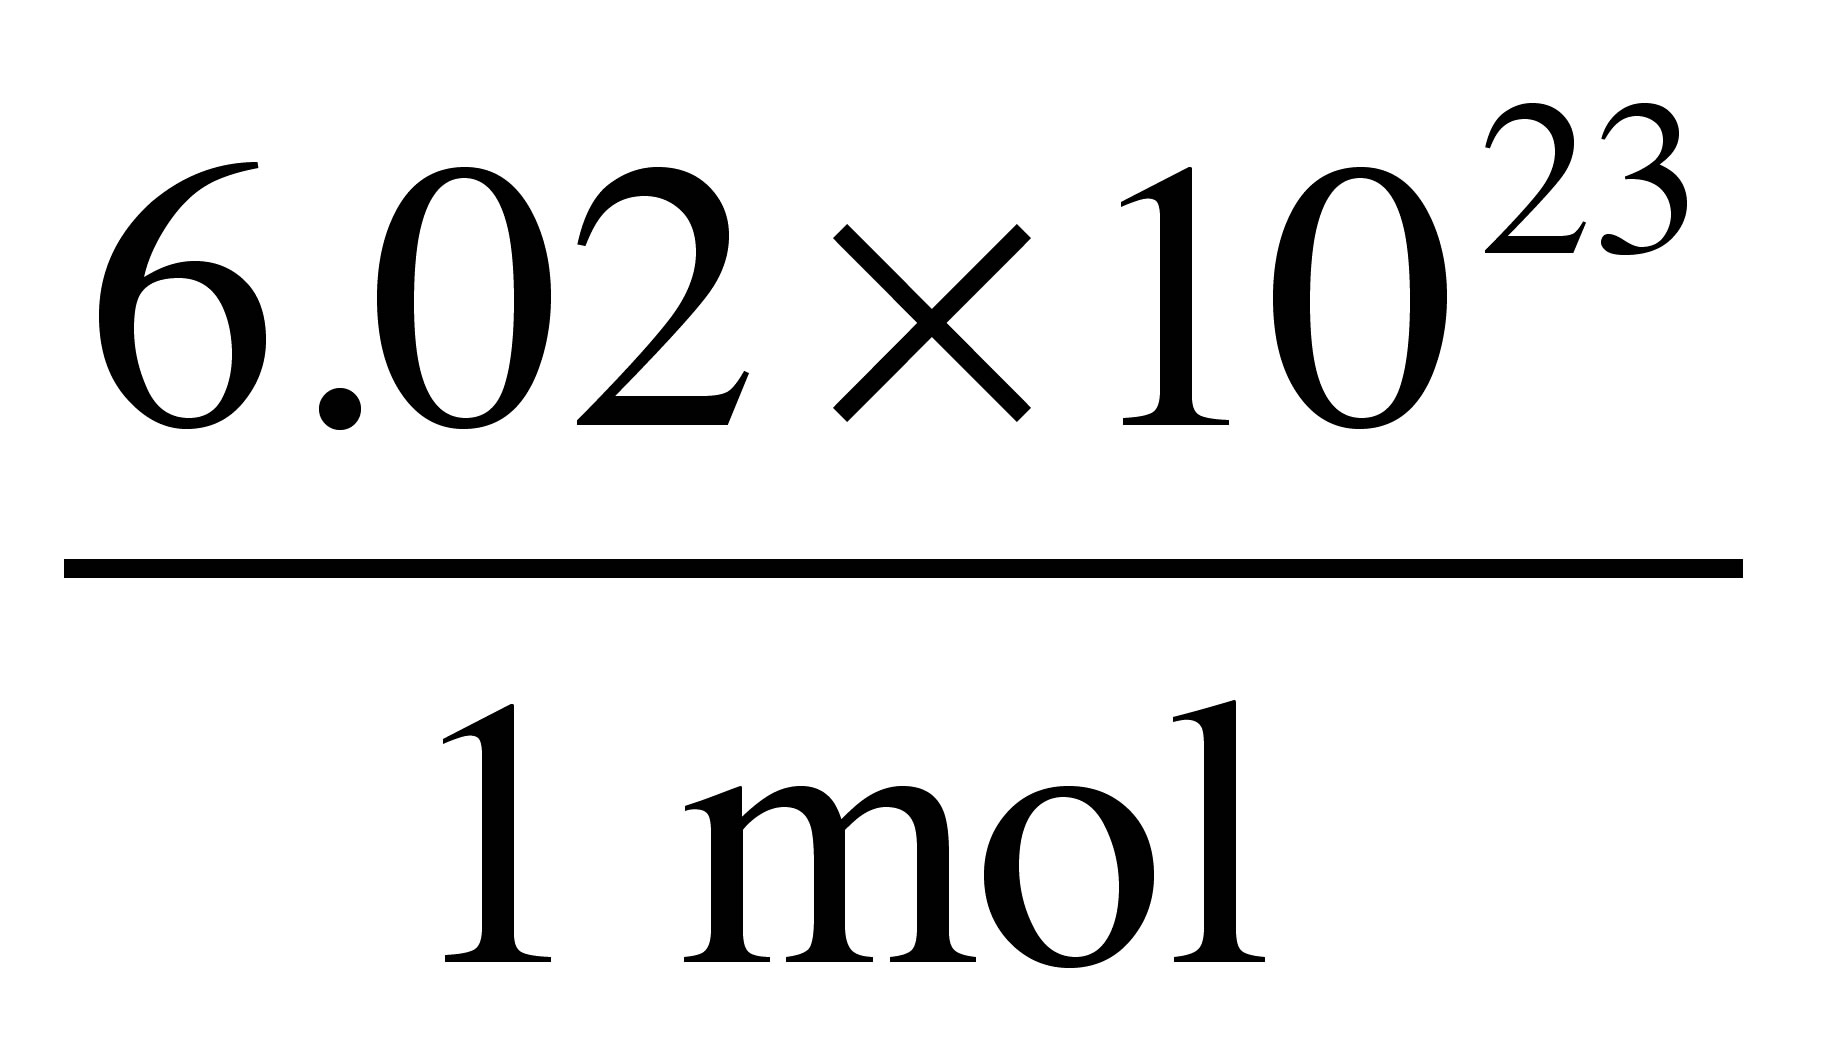 Mg моль. H2o в Avogadro. Авогадро. Avogadro's number. Mol.